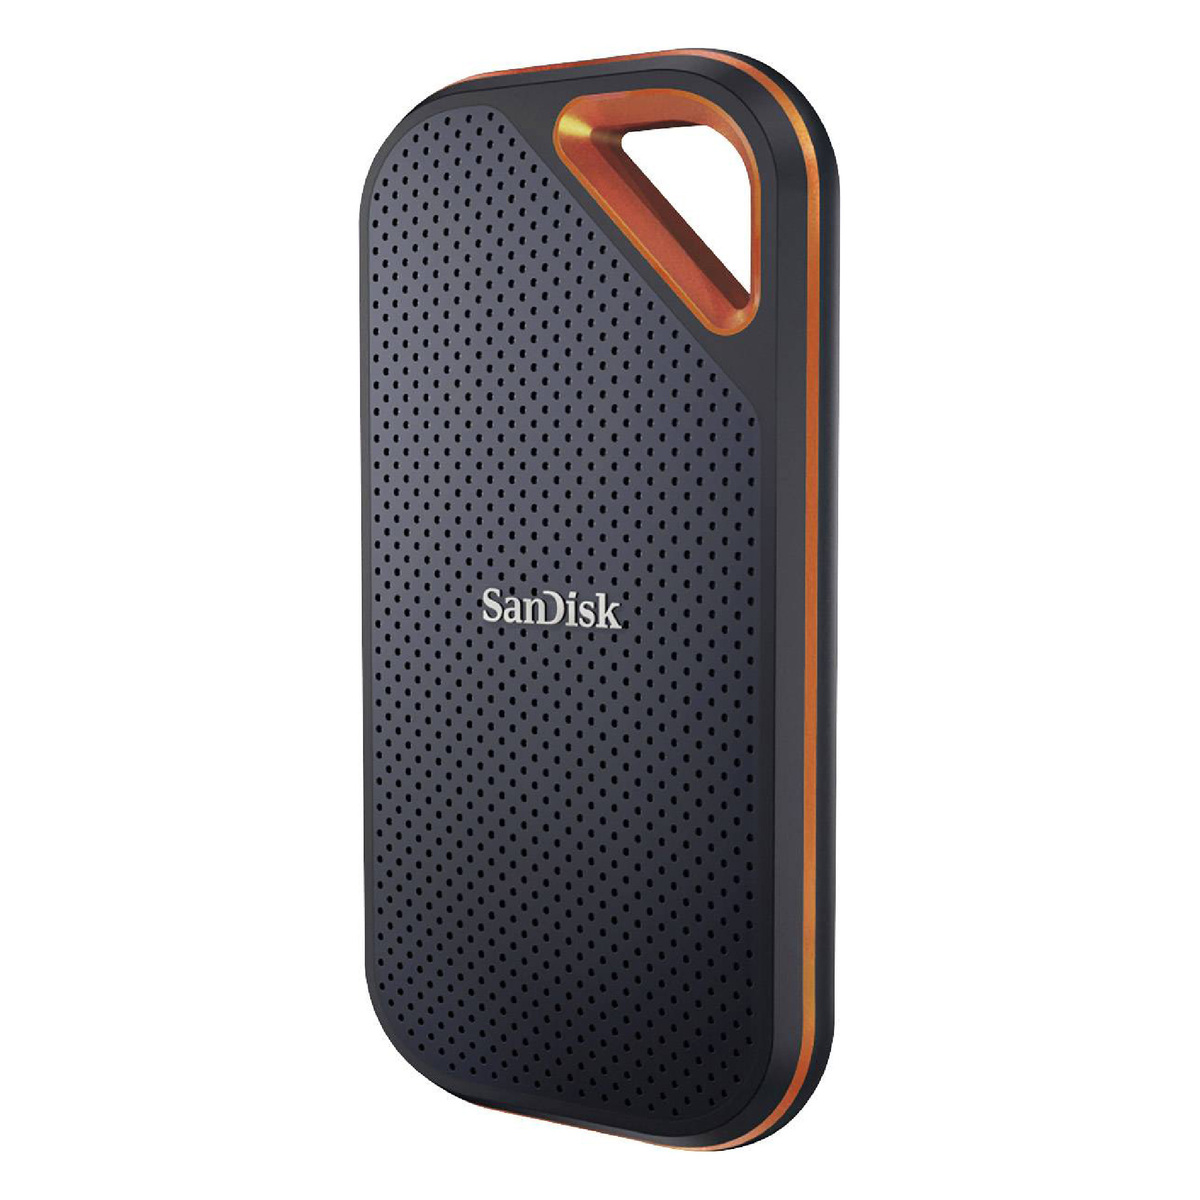 SanDisk Extreme® Pro Portable 1 TB 2.5" external SSD hard drive USB 3.2 Gen 2 (USB 3.1) Black, Orange SDSSDE81